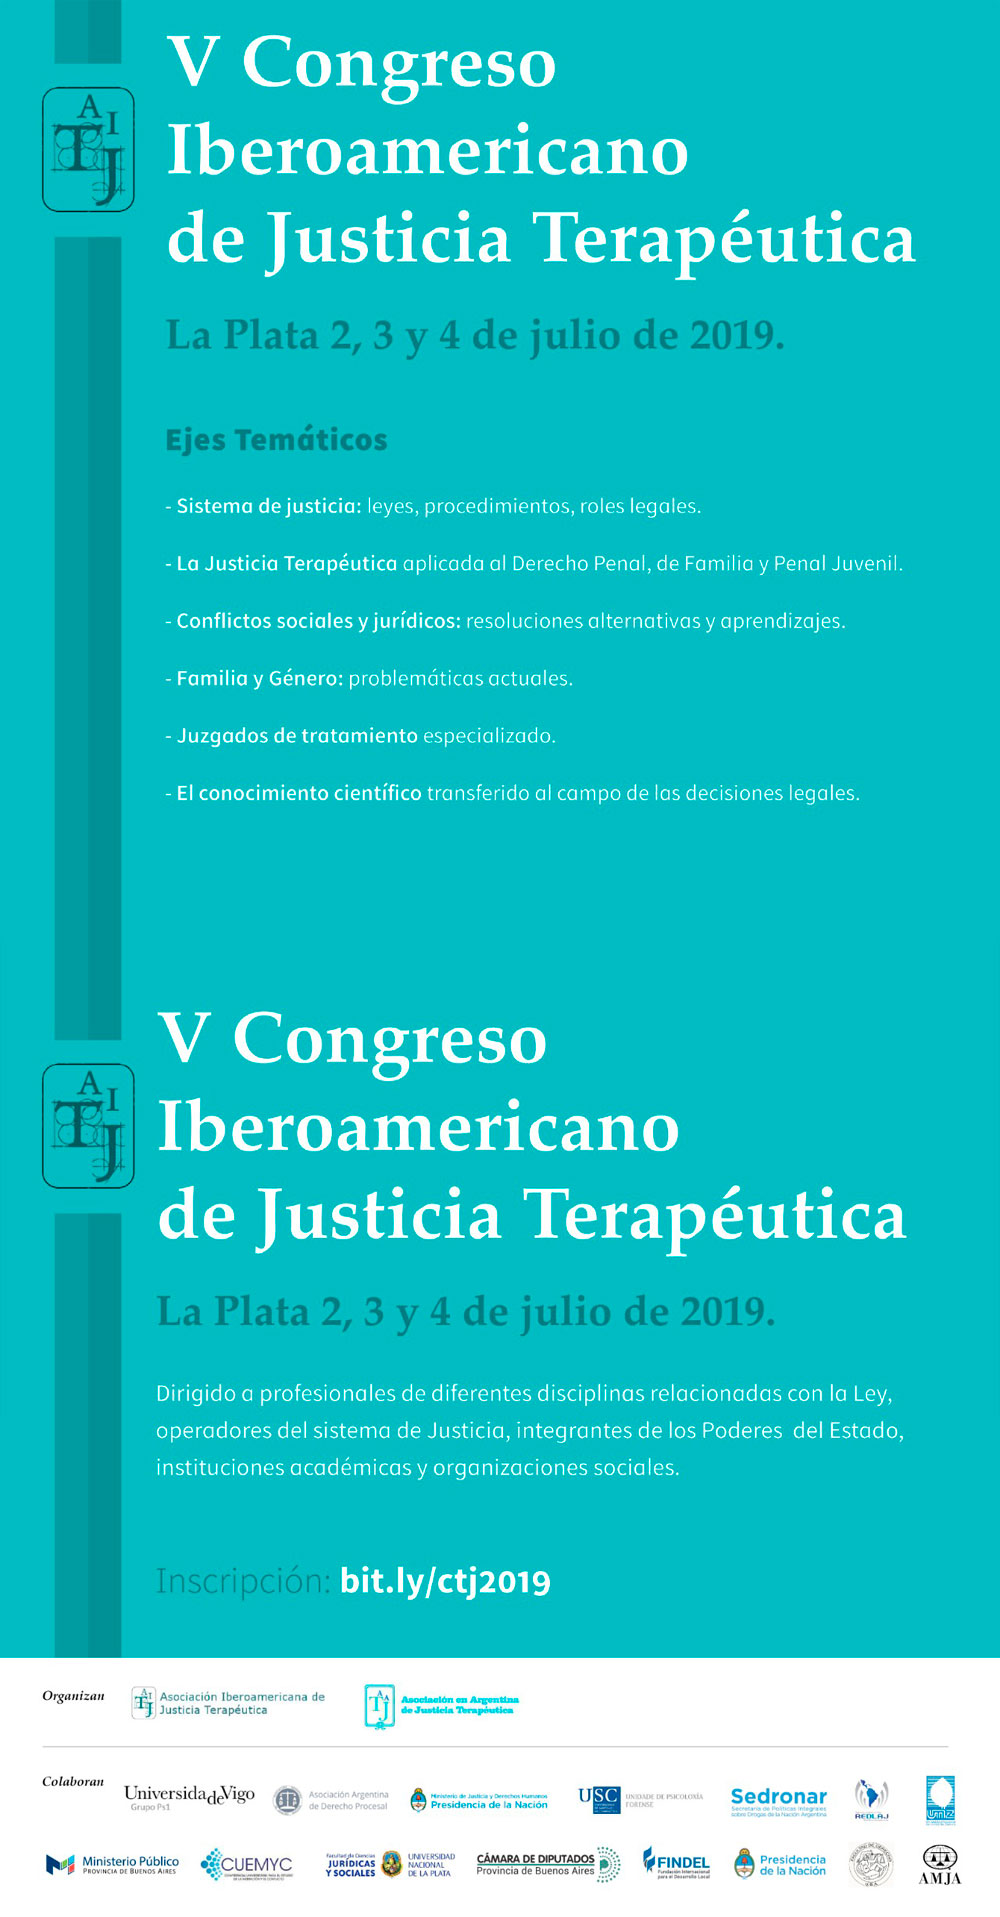 V Congreso Iberoamericano de Justicia Terapéutica